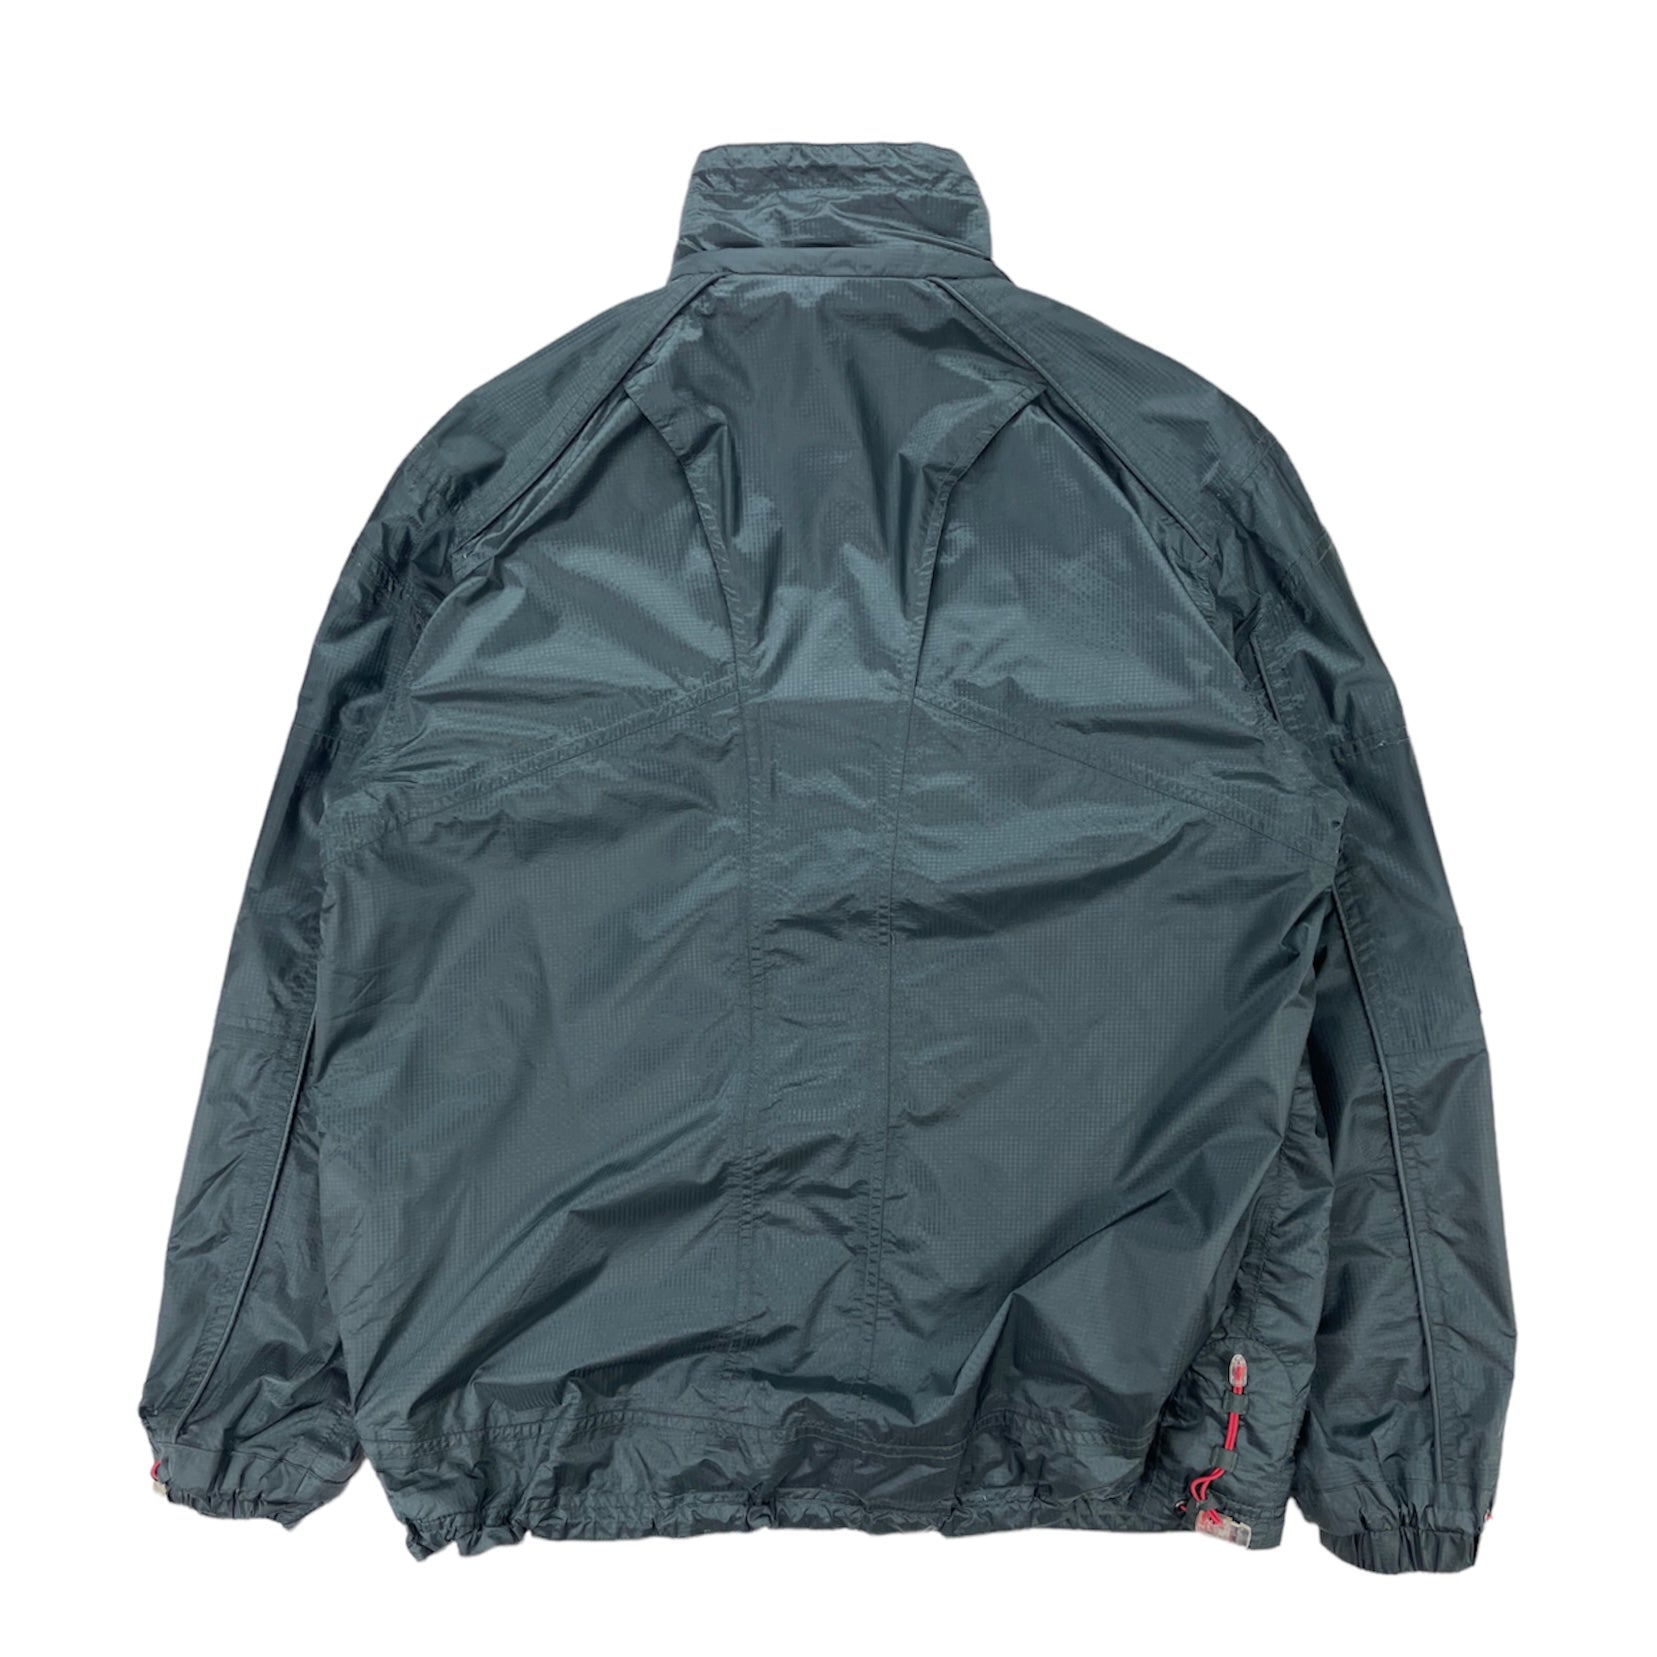 2000s Oakley Software toggle jacket